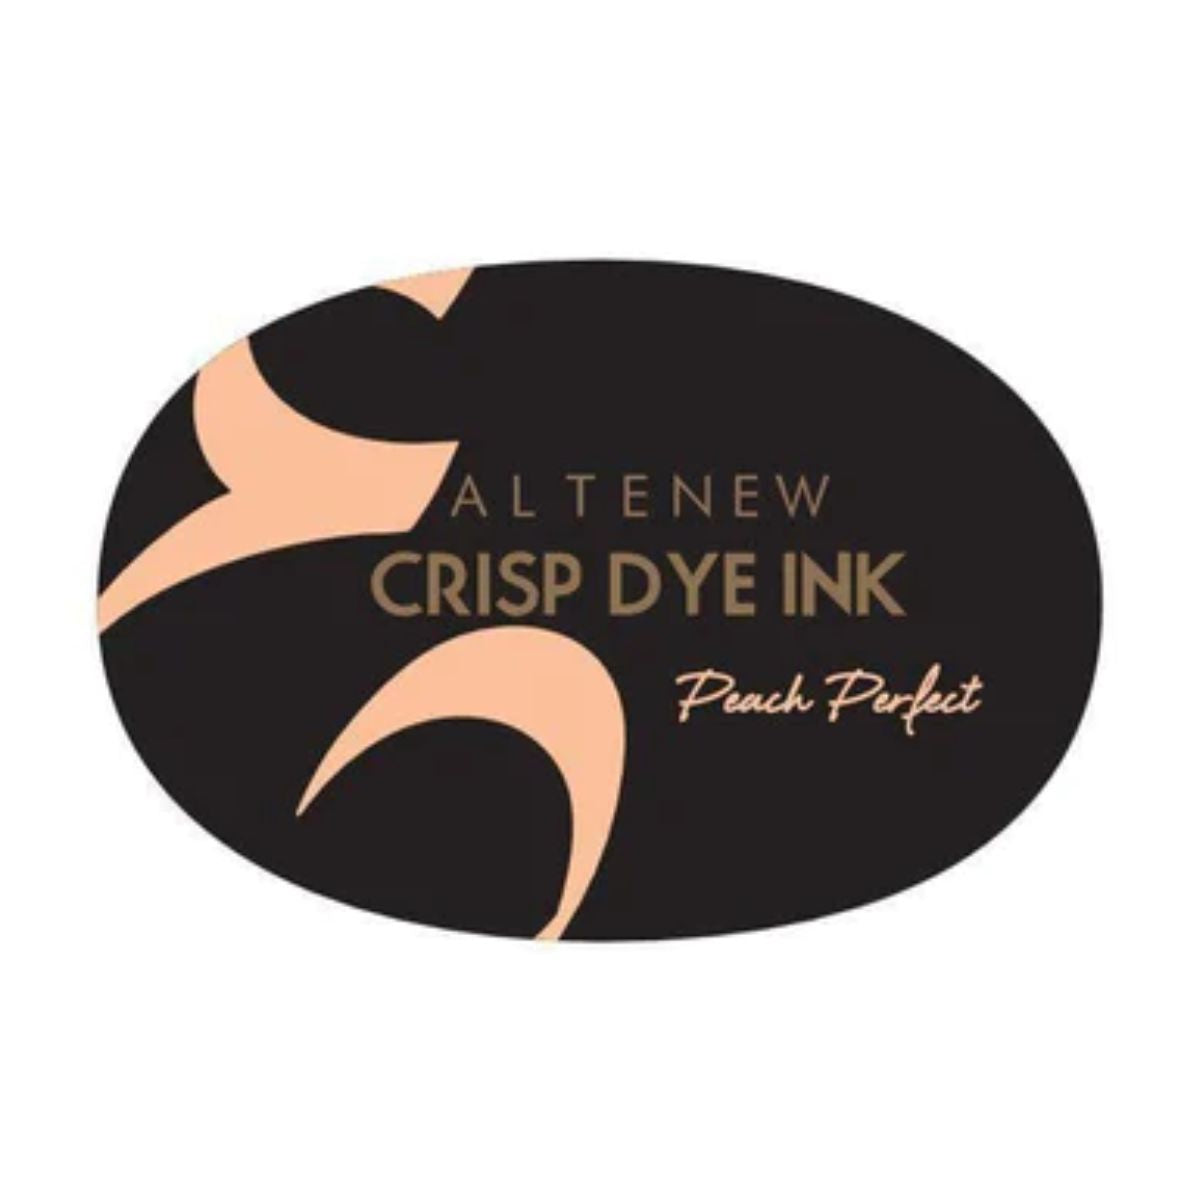 Peach Perfect Crisp Dye Ink / Tinta para Sellos Durazno